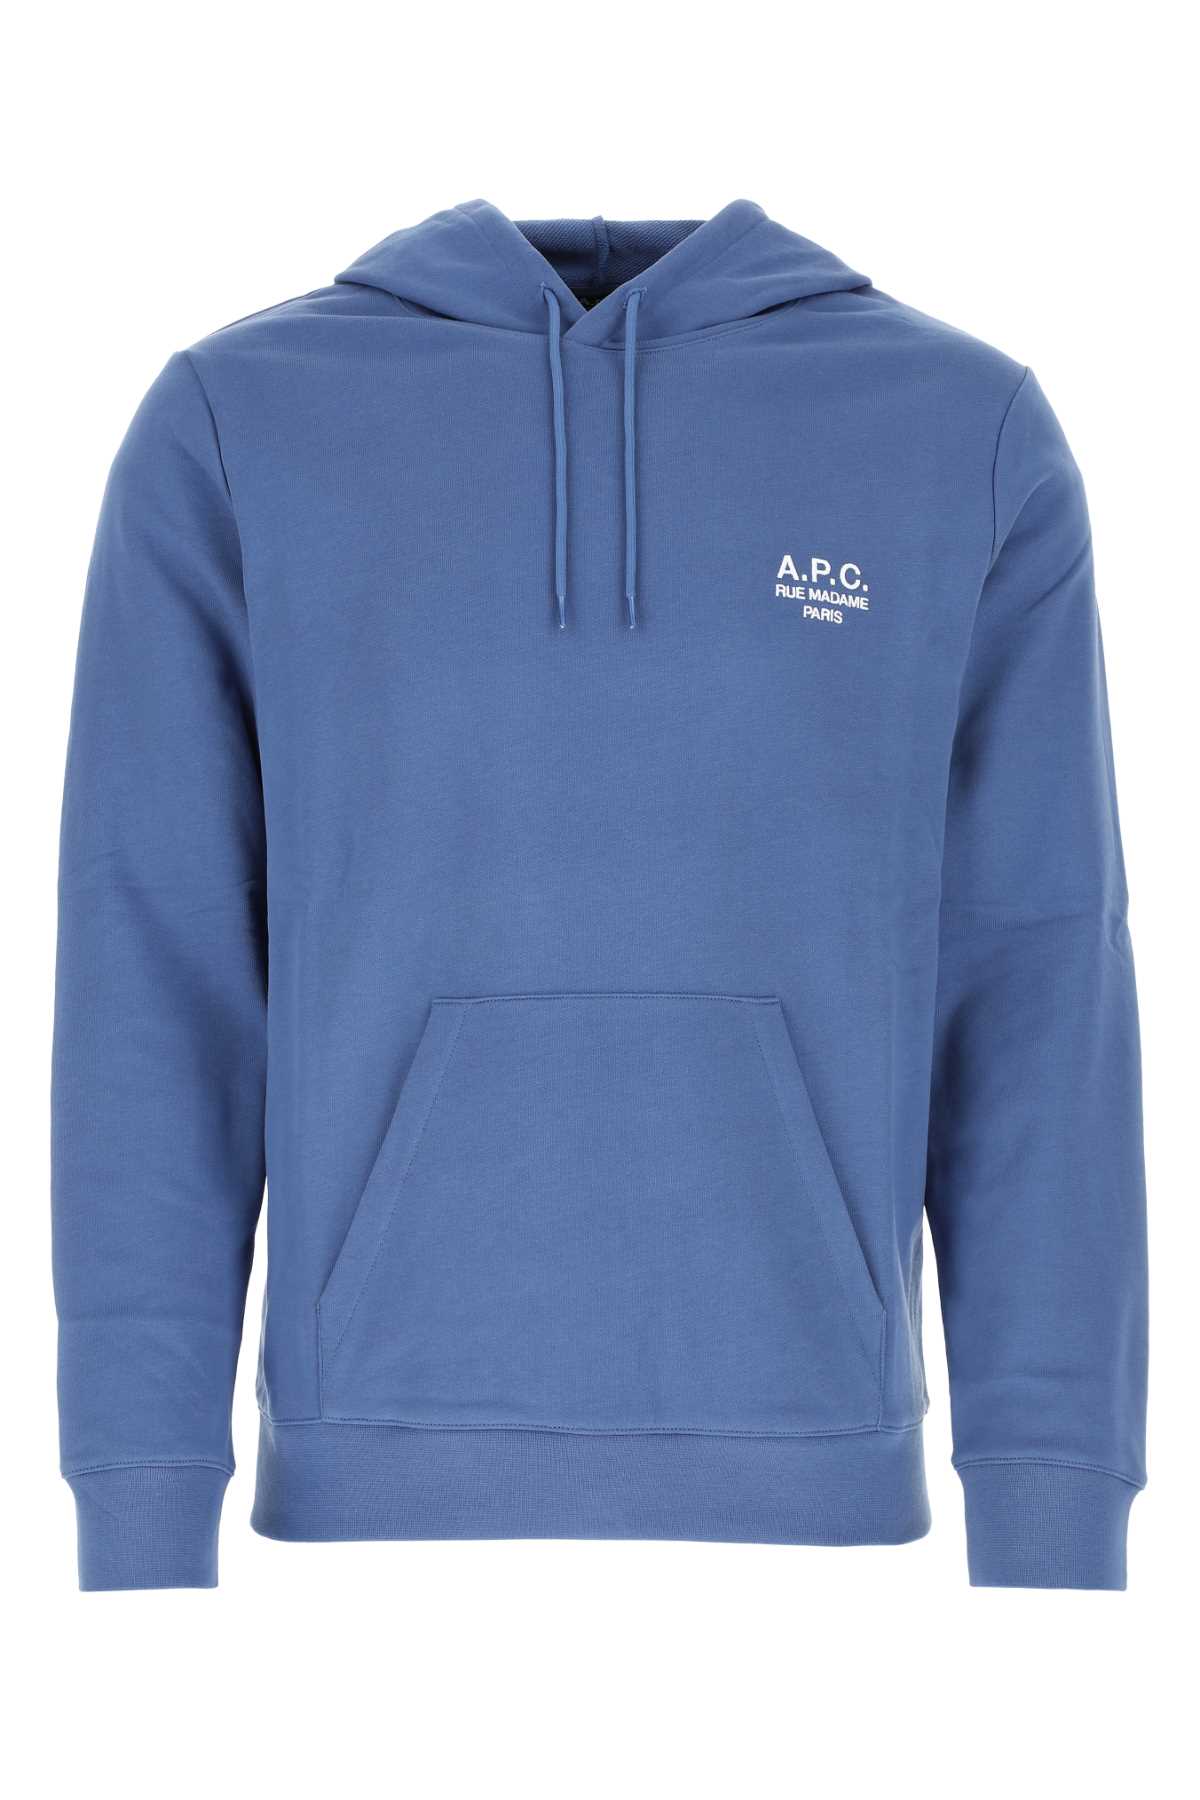 Apc Air Force Blue Cotton Sweatshirt